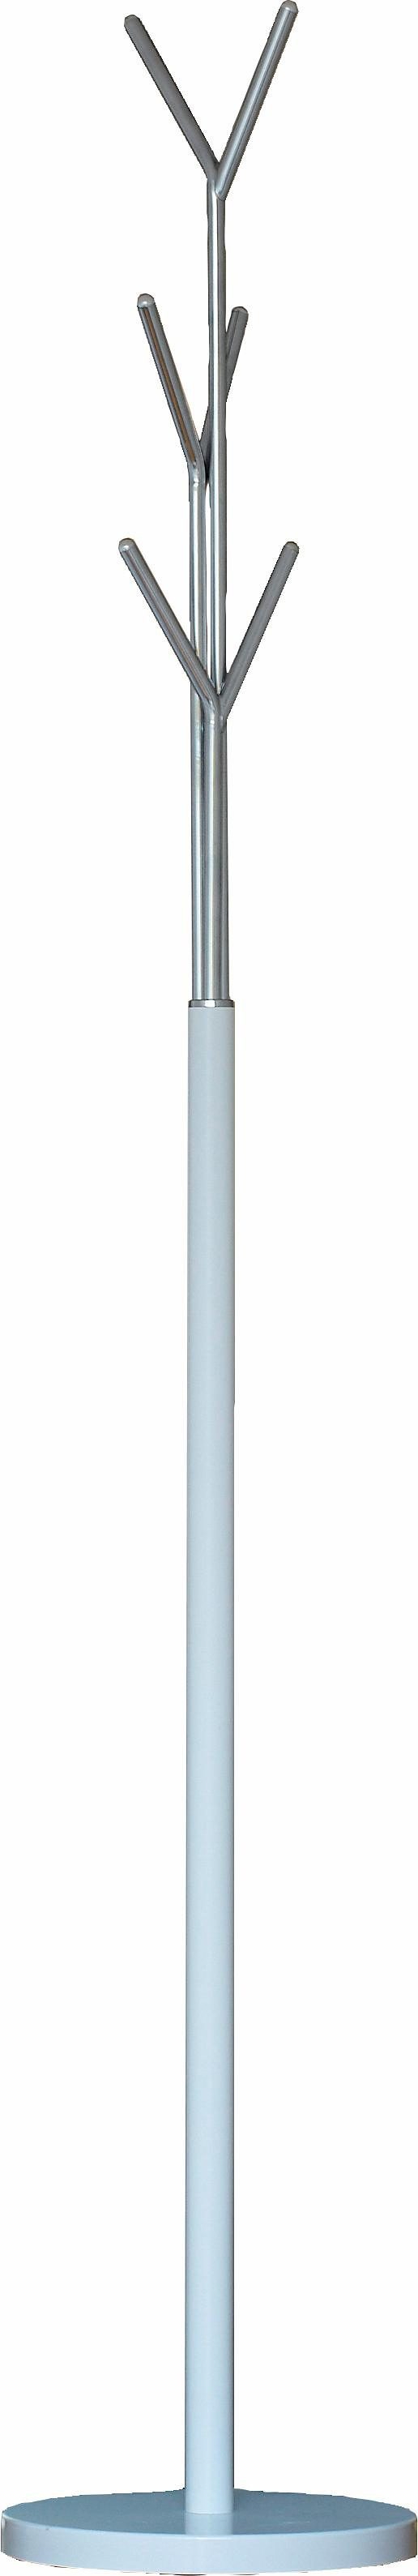 Garderobenständer »london«, Höhe ca. 177 cm, in 3 Farben